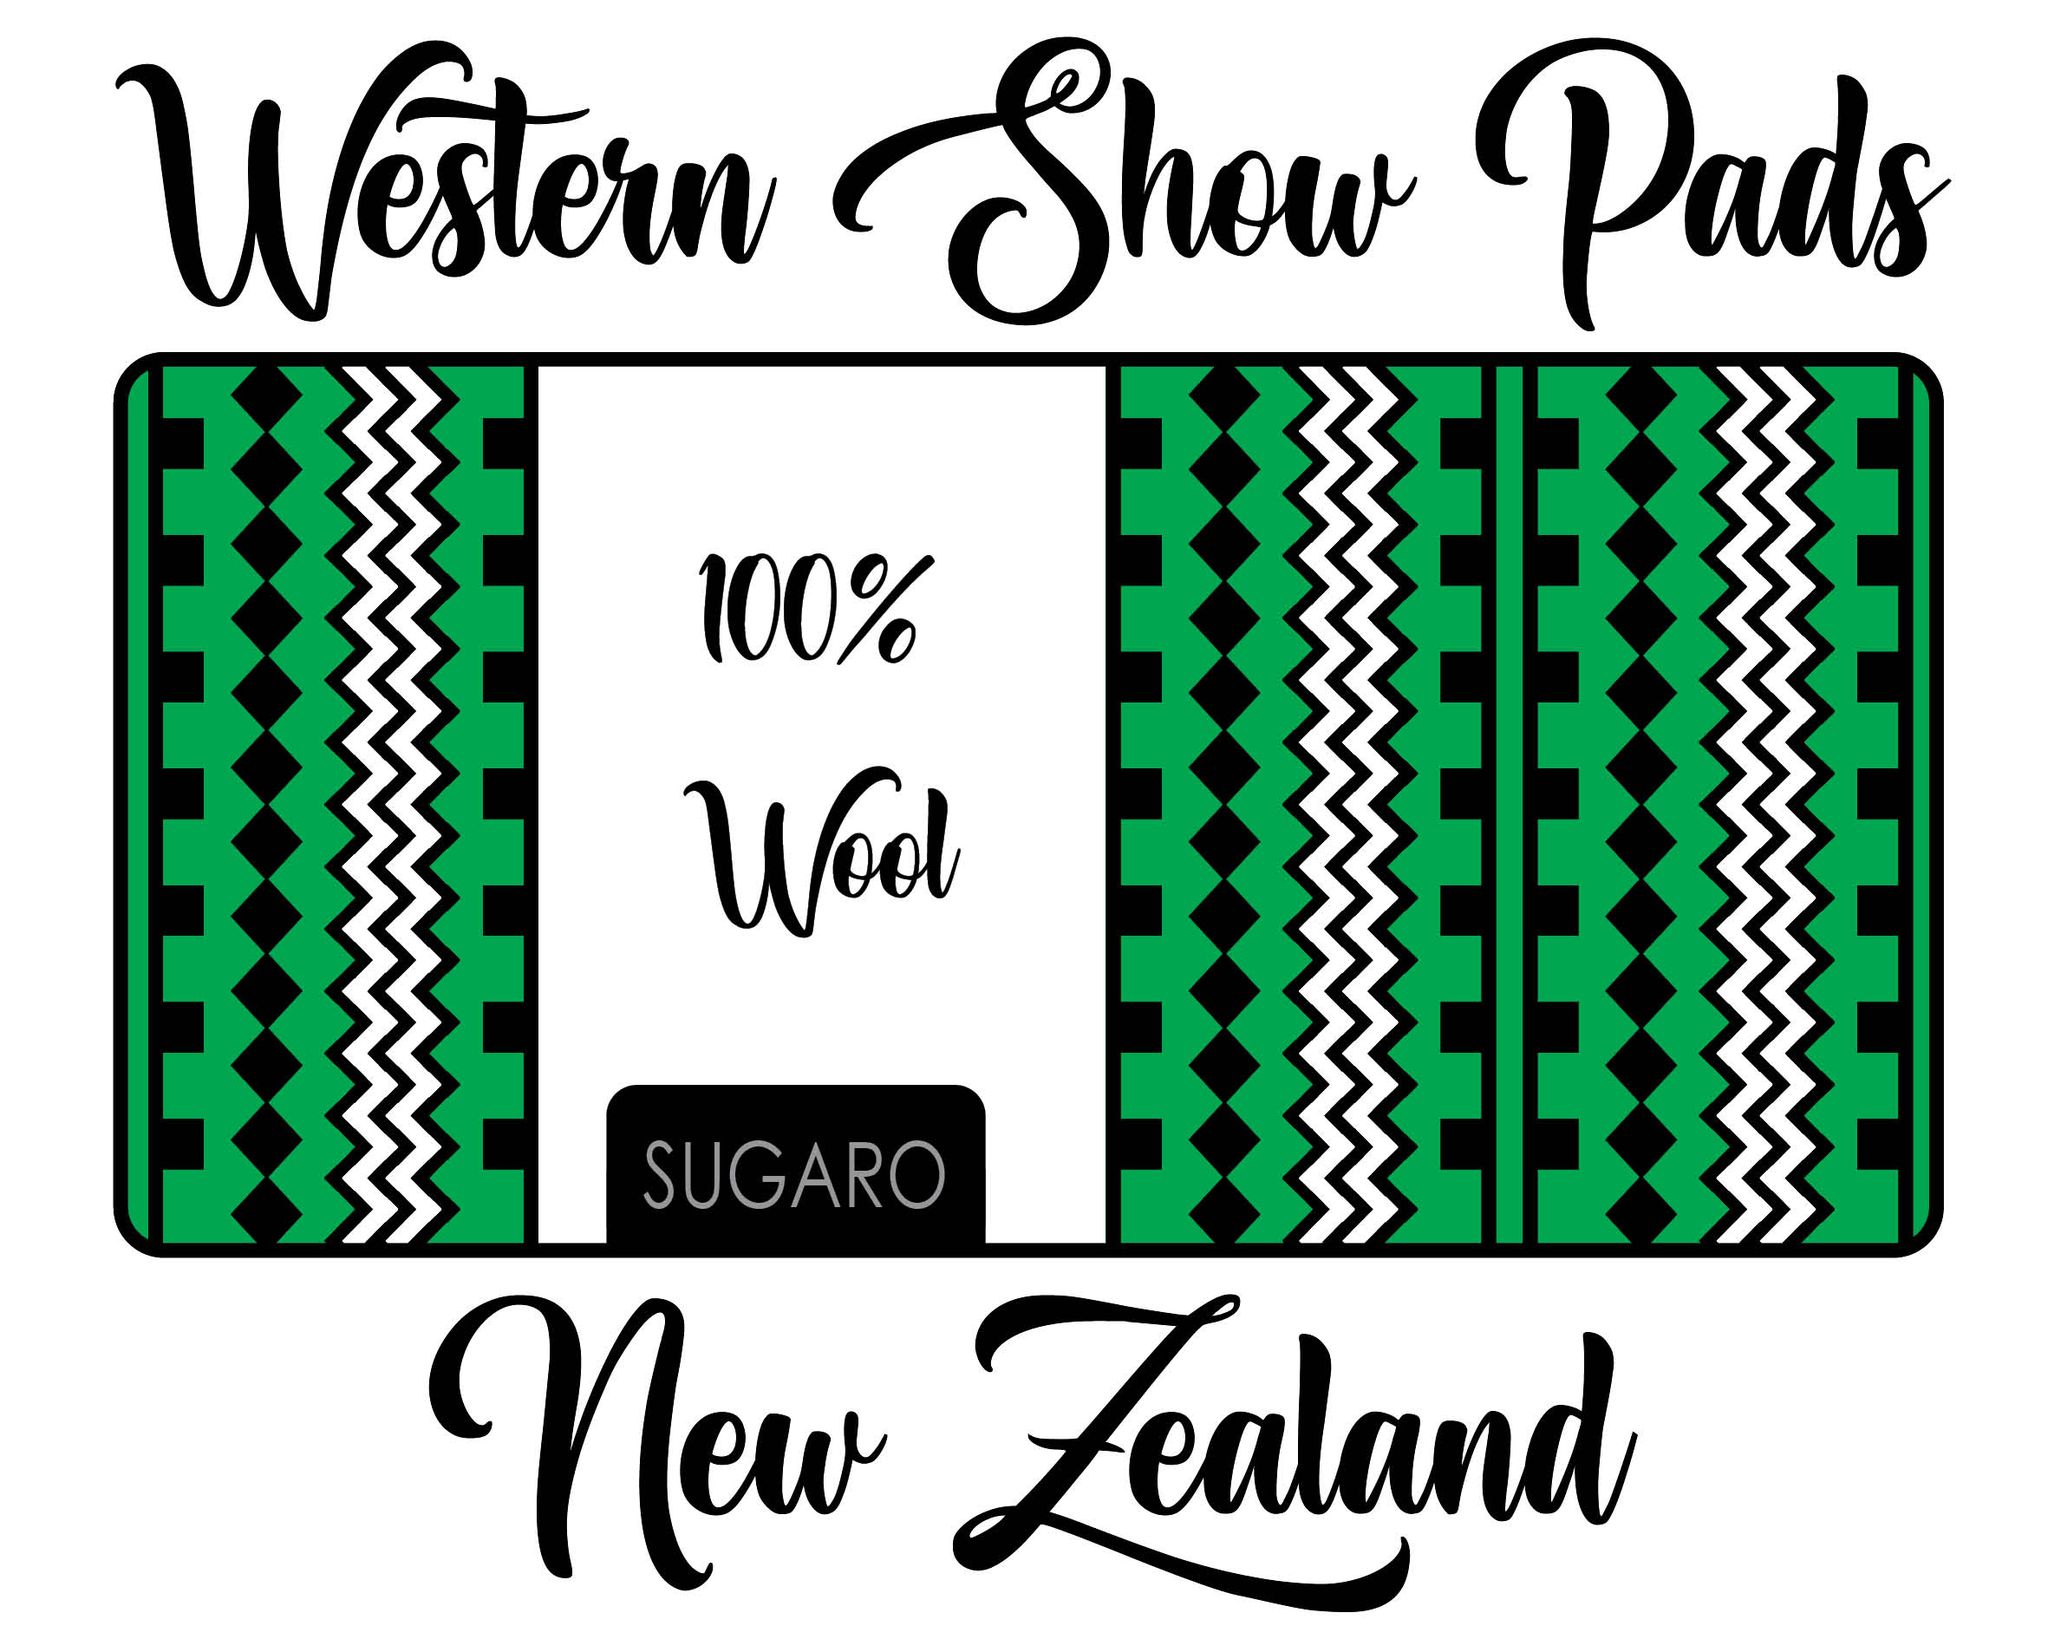 Western Show Pads New Zealand 